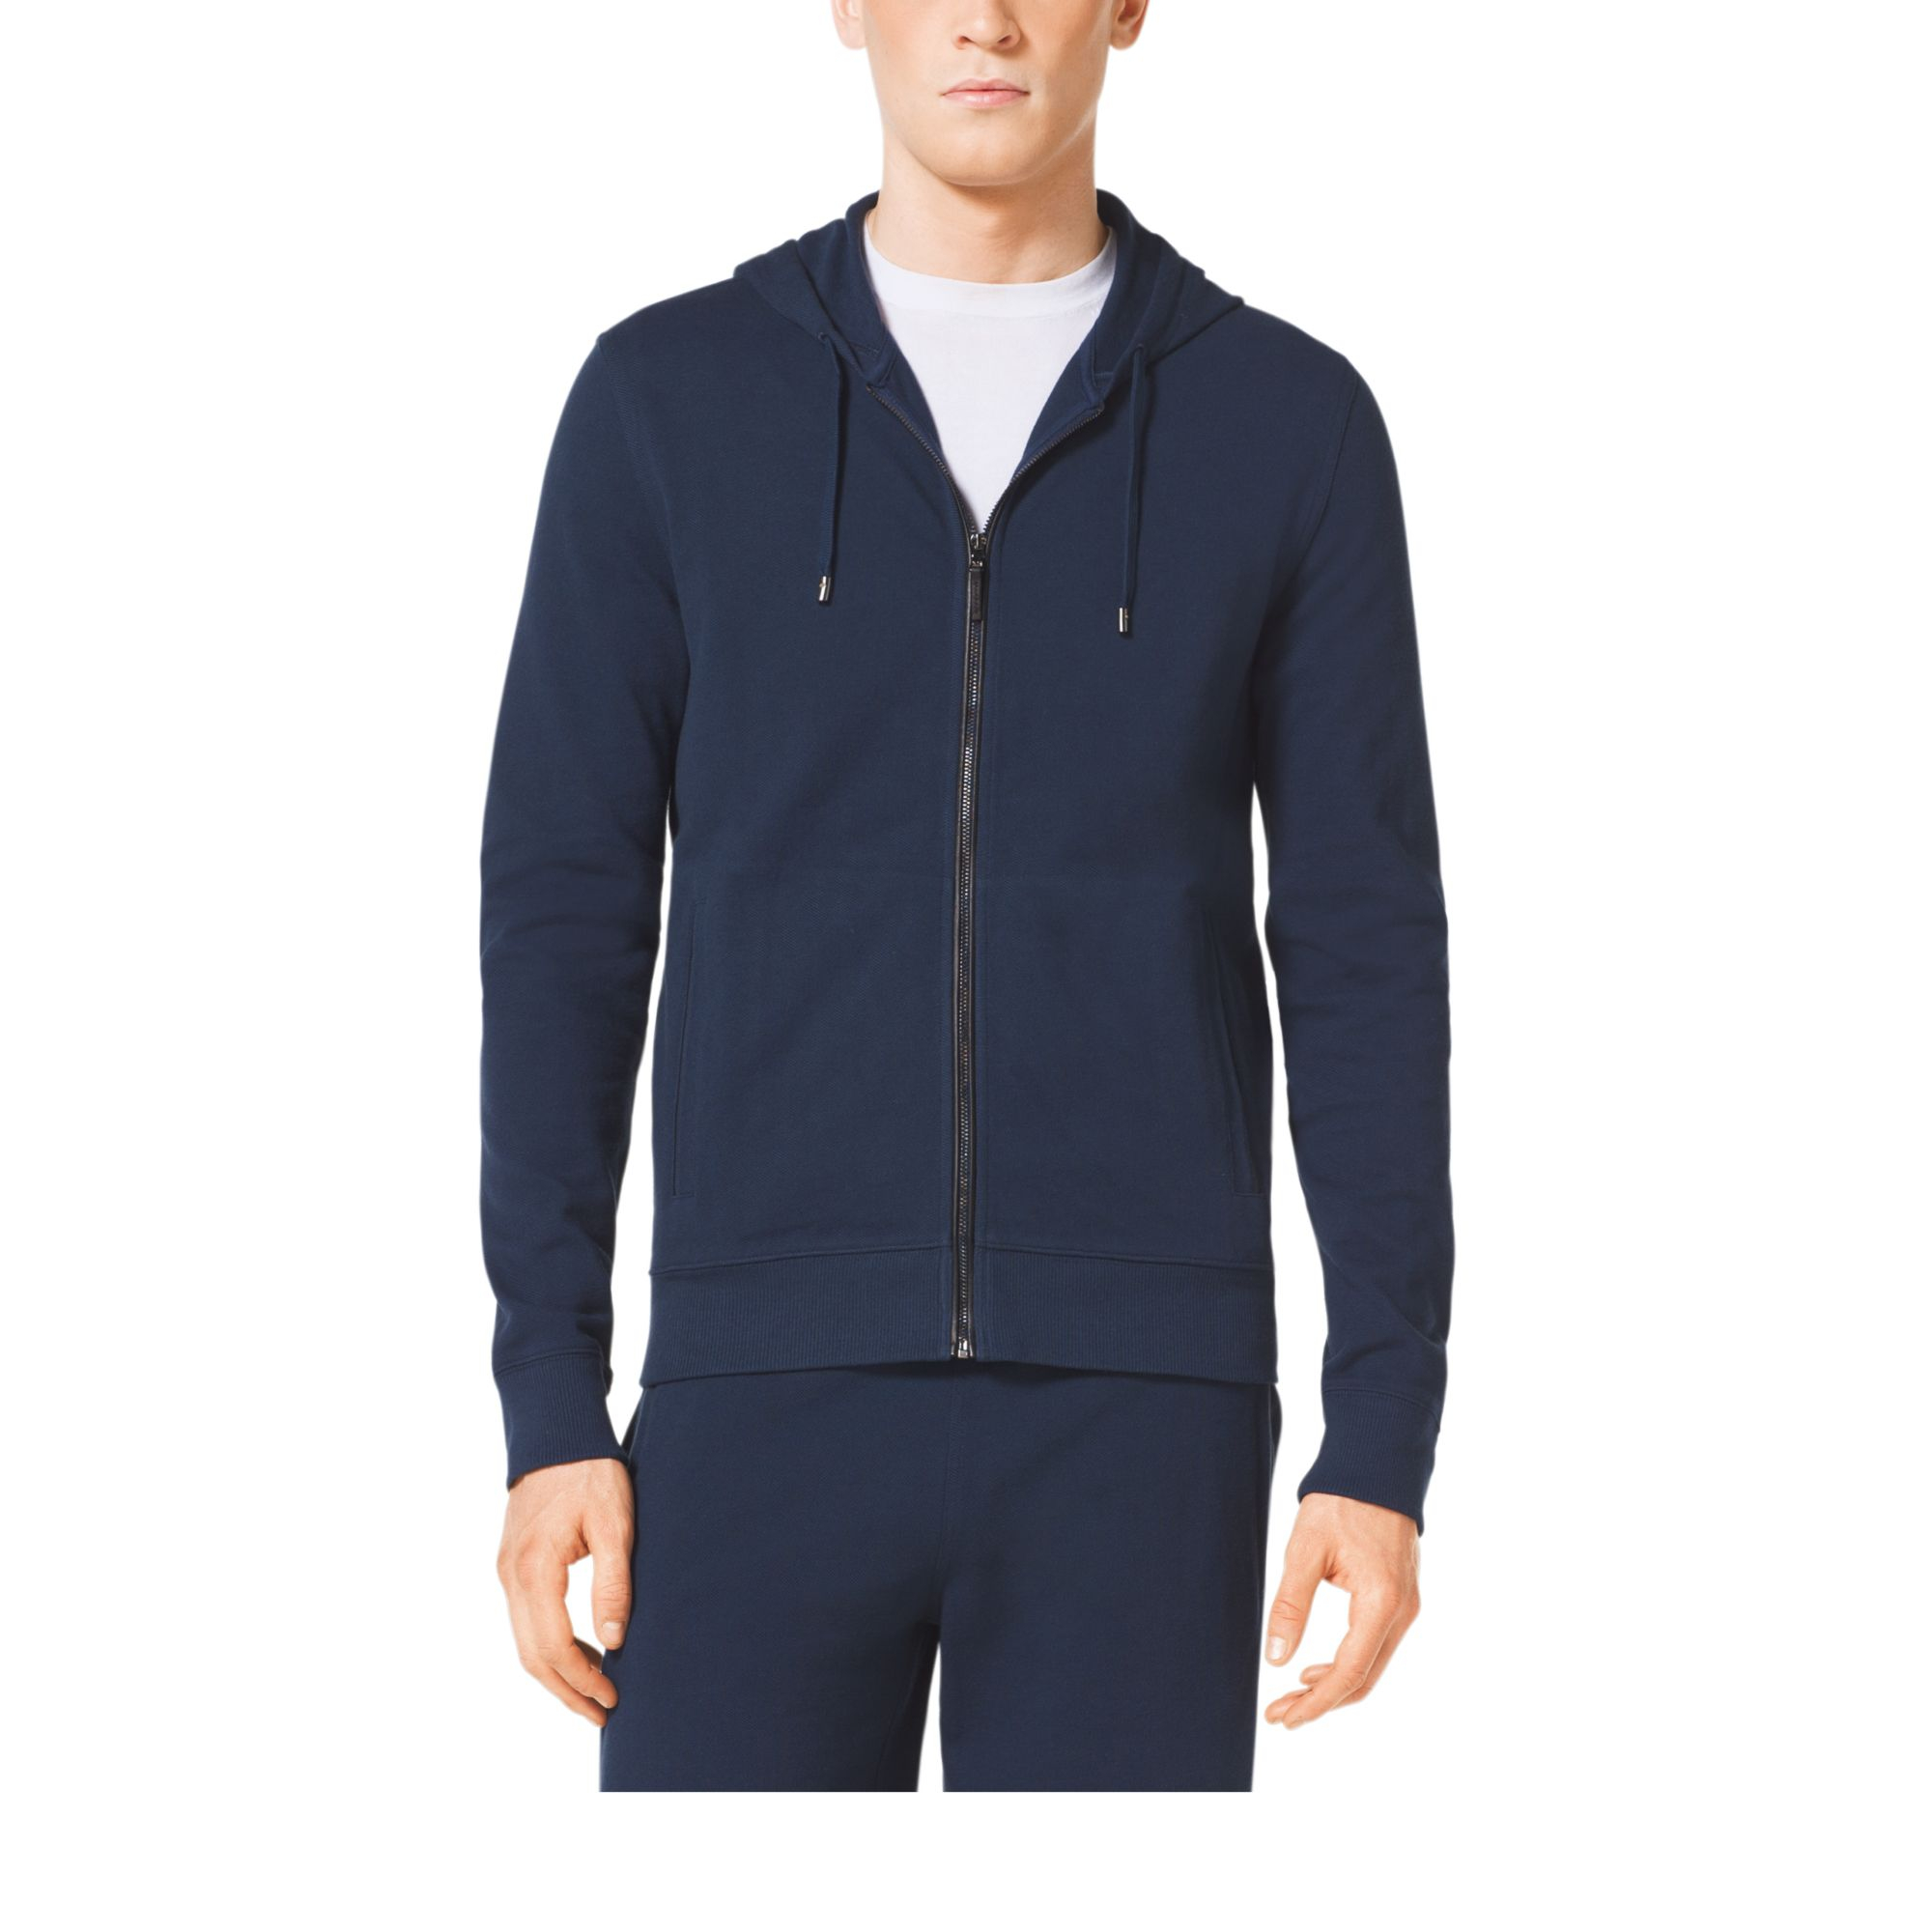 Lyst - Michael Kors Full-zip Hooded Cotton Sweatshirt in Blue for Men